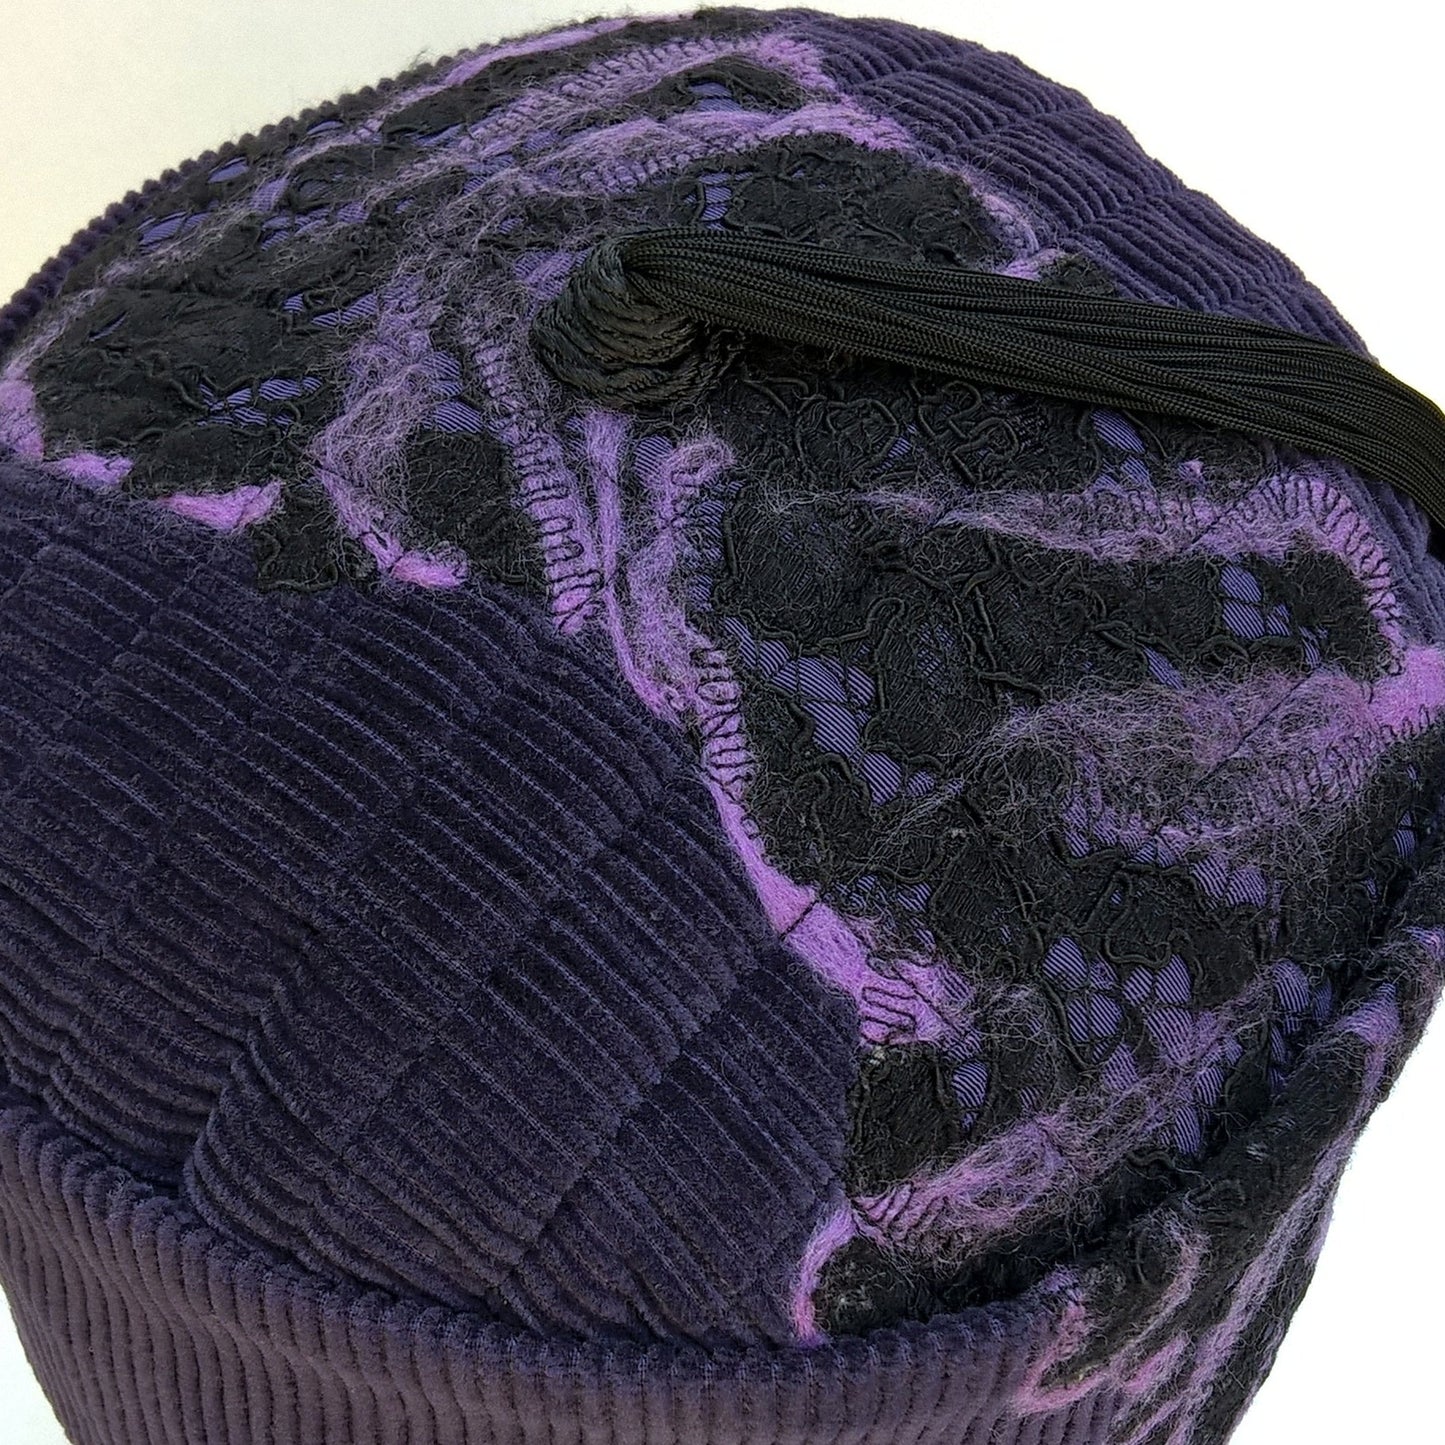 nuno felting and tassel detail on tip of purple corduroy smoking cap